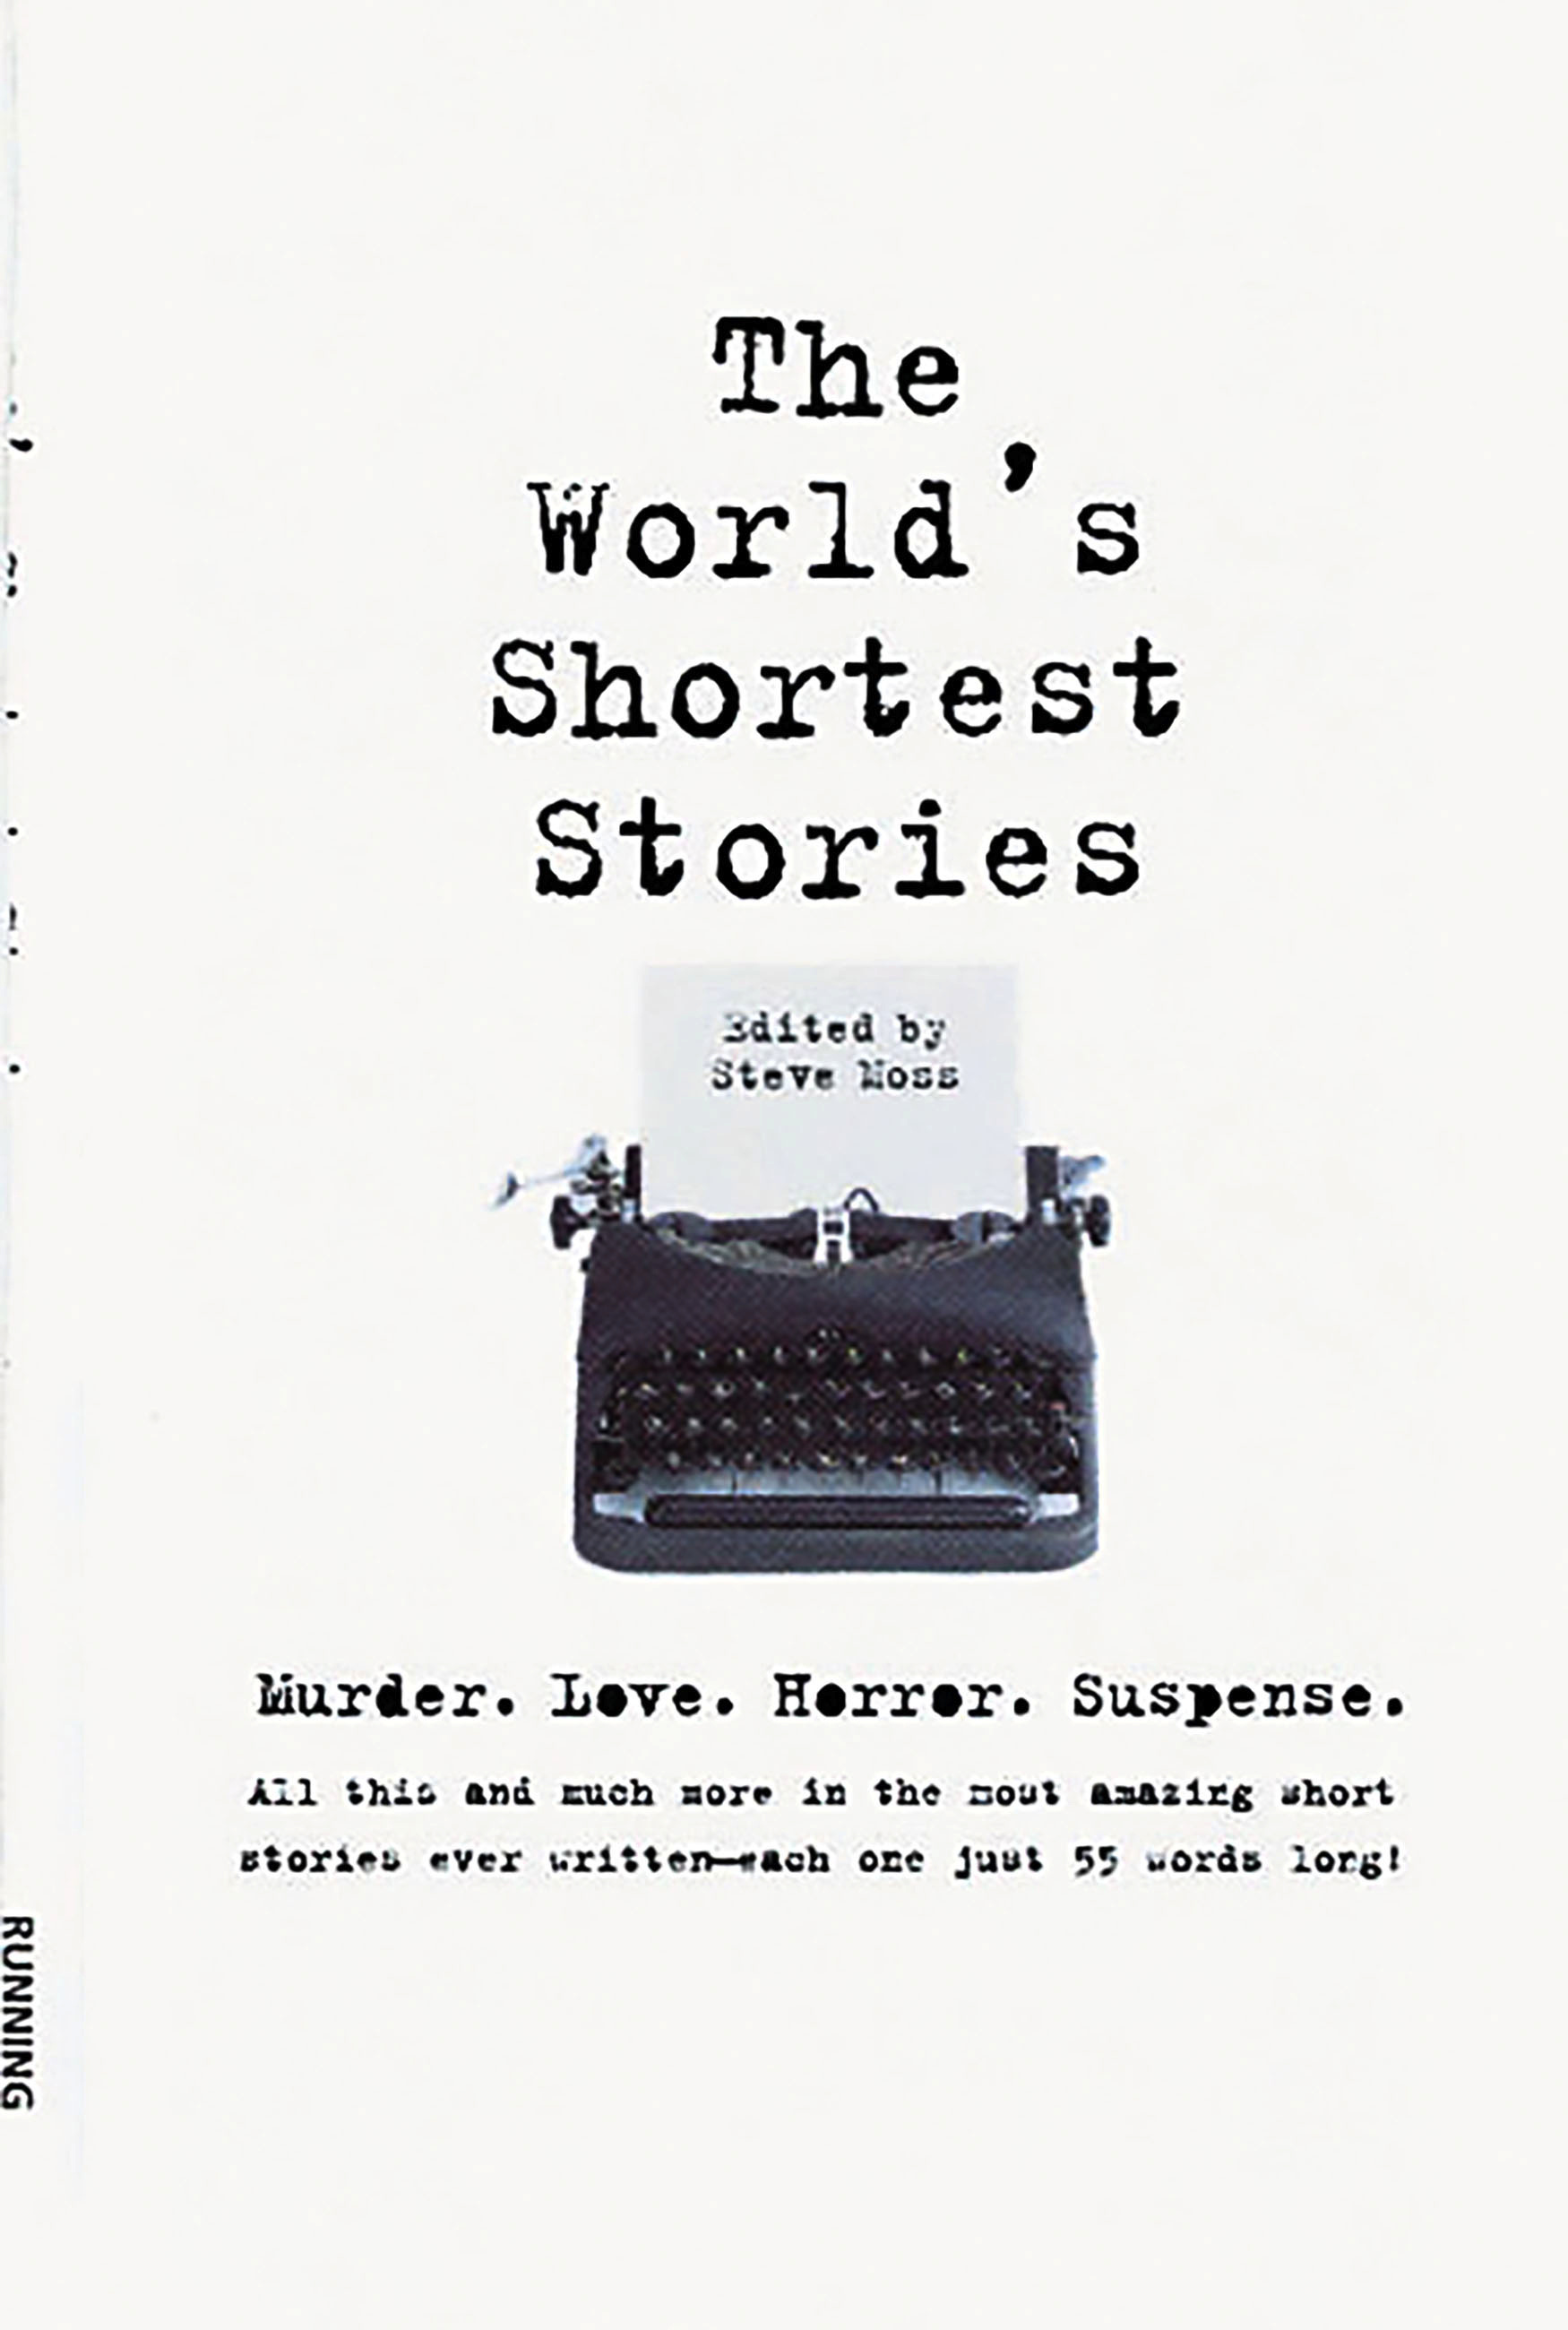 Is the shortest in the world. Very short stories. A very short story книга. Short stories of Suspense. Кто такой Стив Мосс.